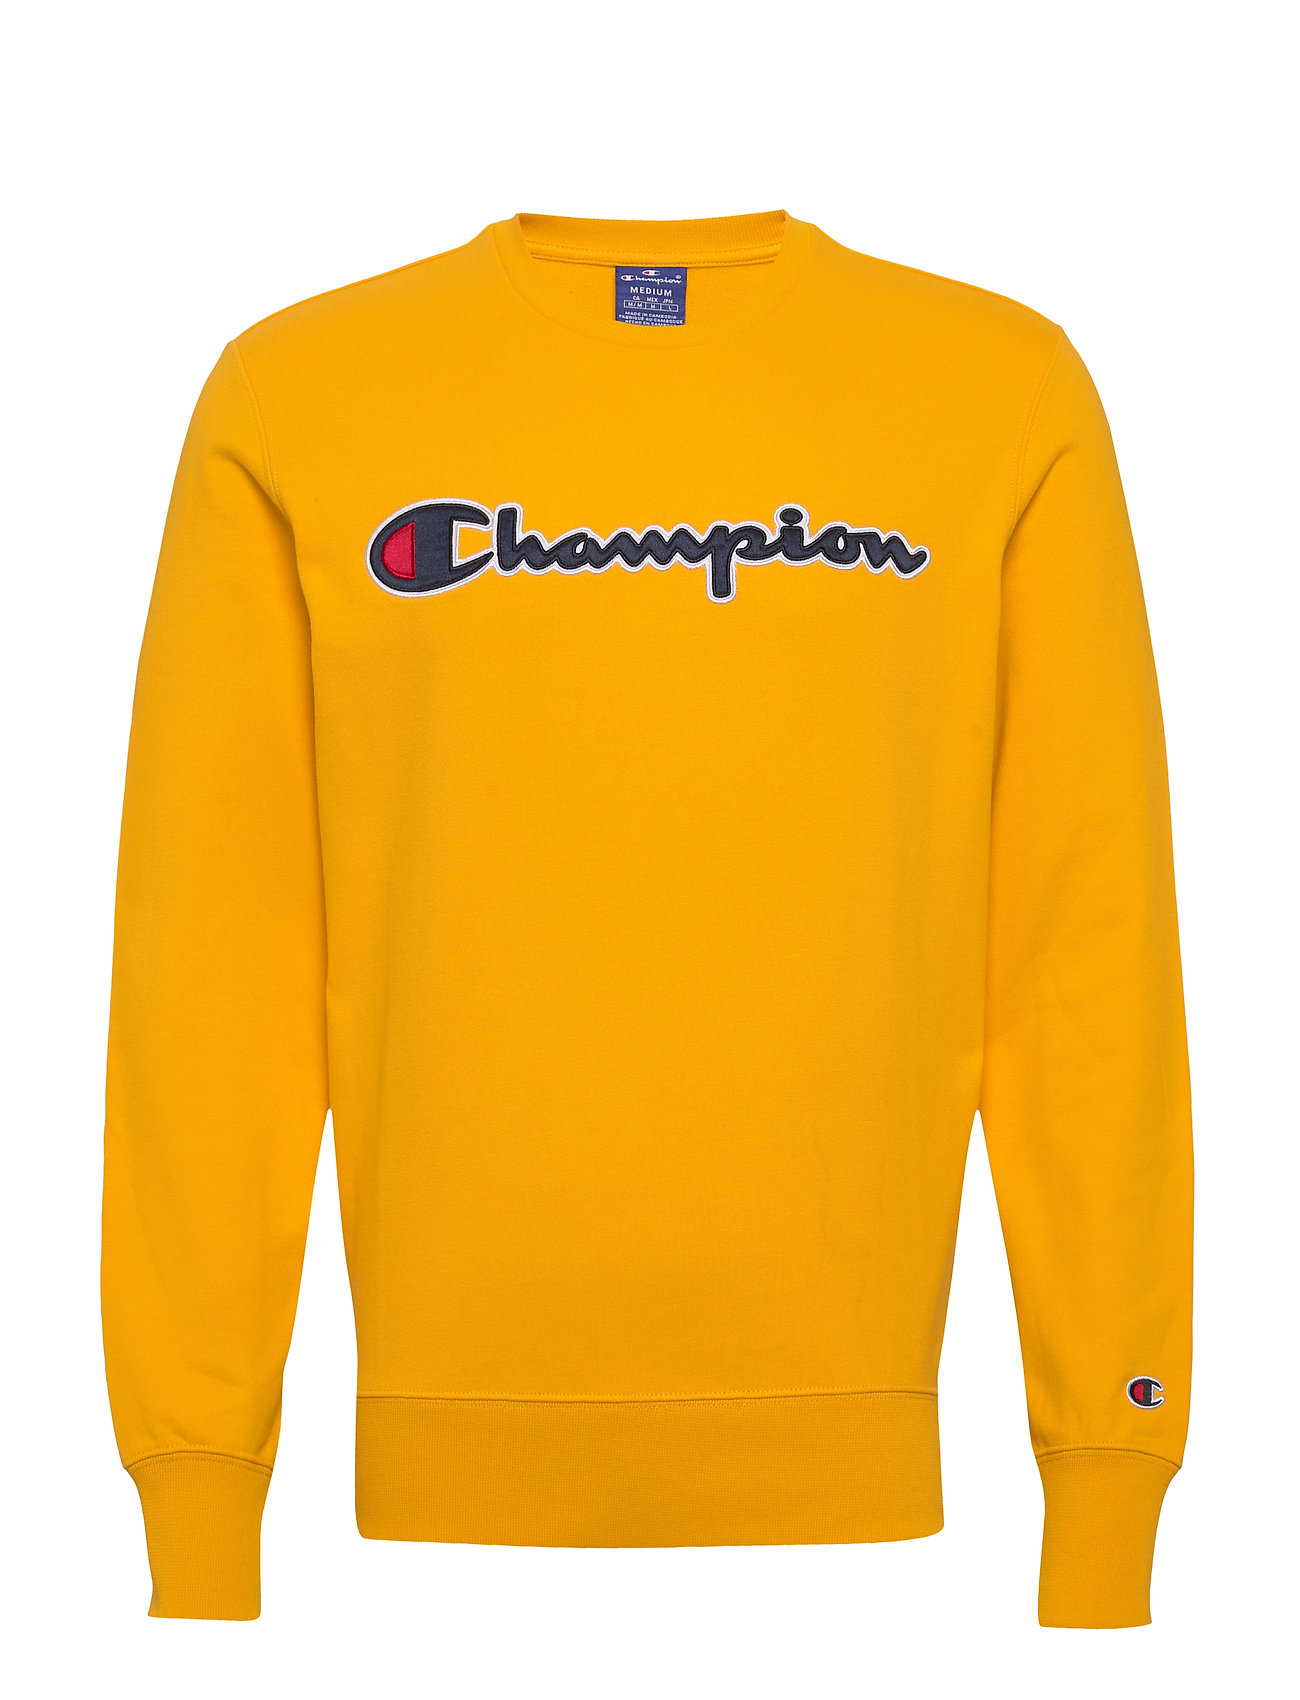 black and yellow champion sweatshirt